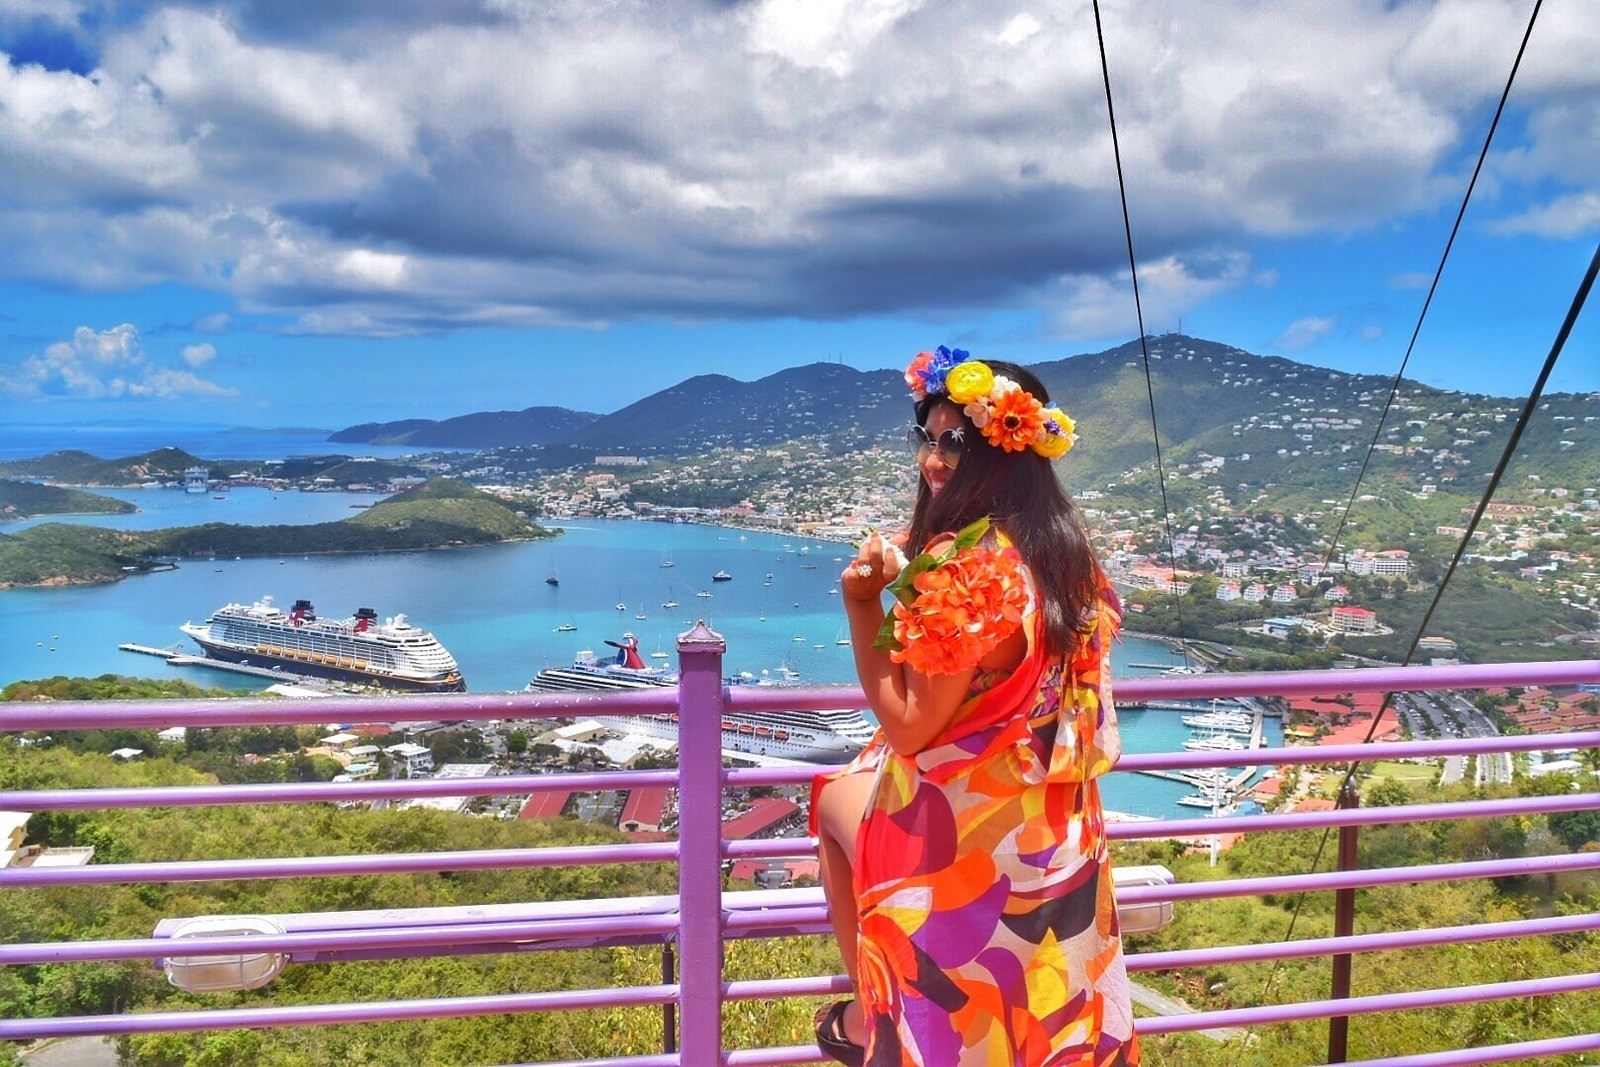 US Virgin Islands - Carnival Splendor Cruise -Caribbean Trip Kach and Jonathan